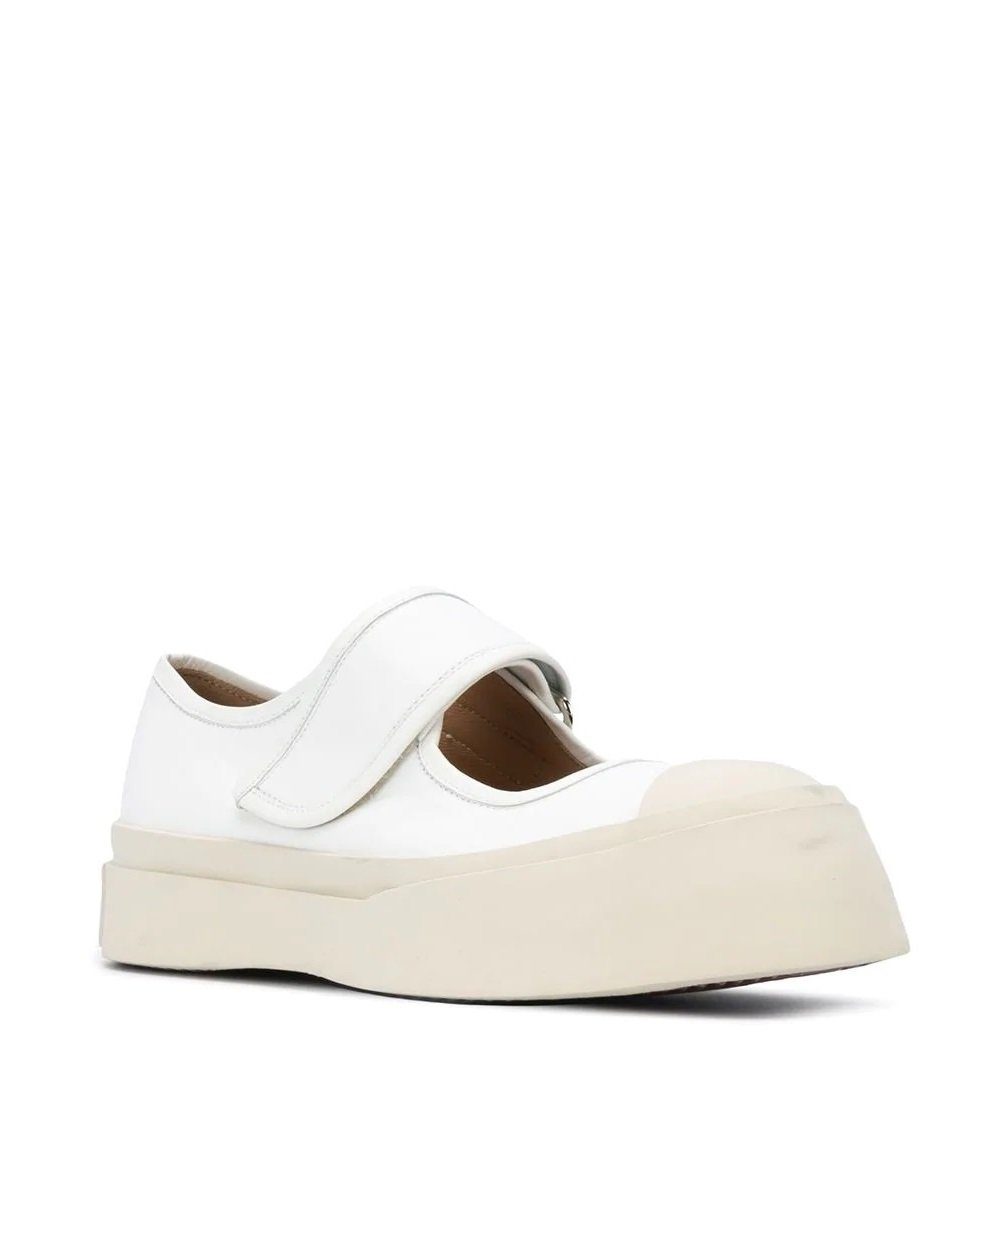 Marni Pablo Touch-Strap Sneakers, White – Fashionbarn shop